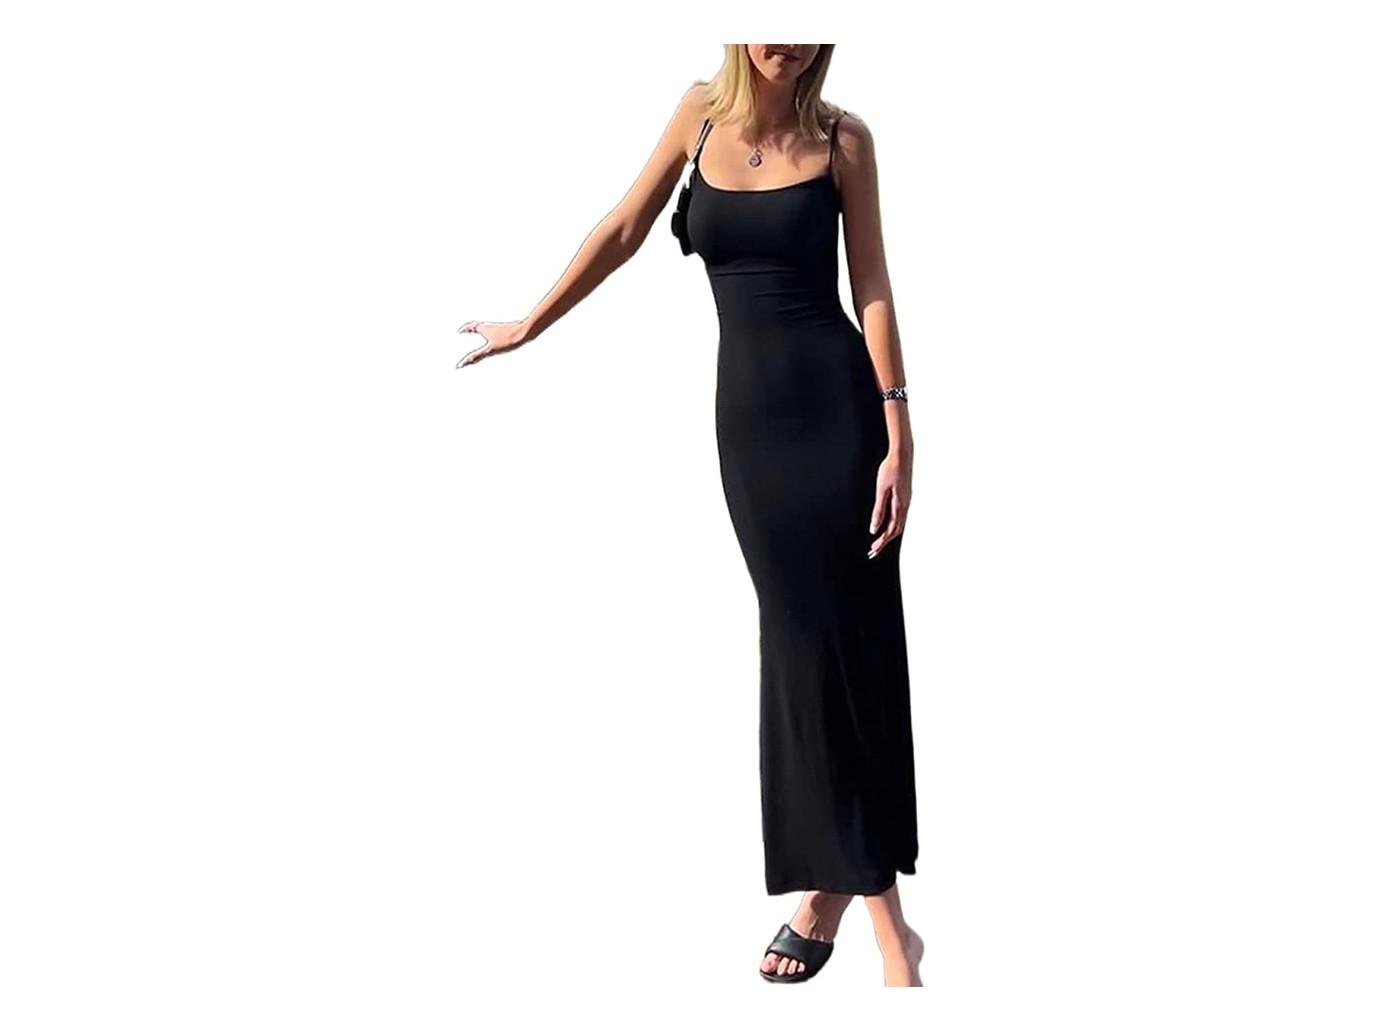 Skims dress dupe linked in my  storefront in bio! Colors: Hazelnut,  Jet Black, & Aegean. Wearing size XS 🫶🏾